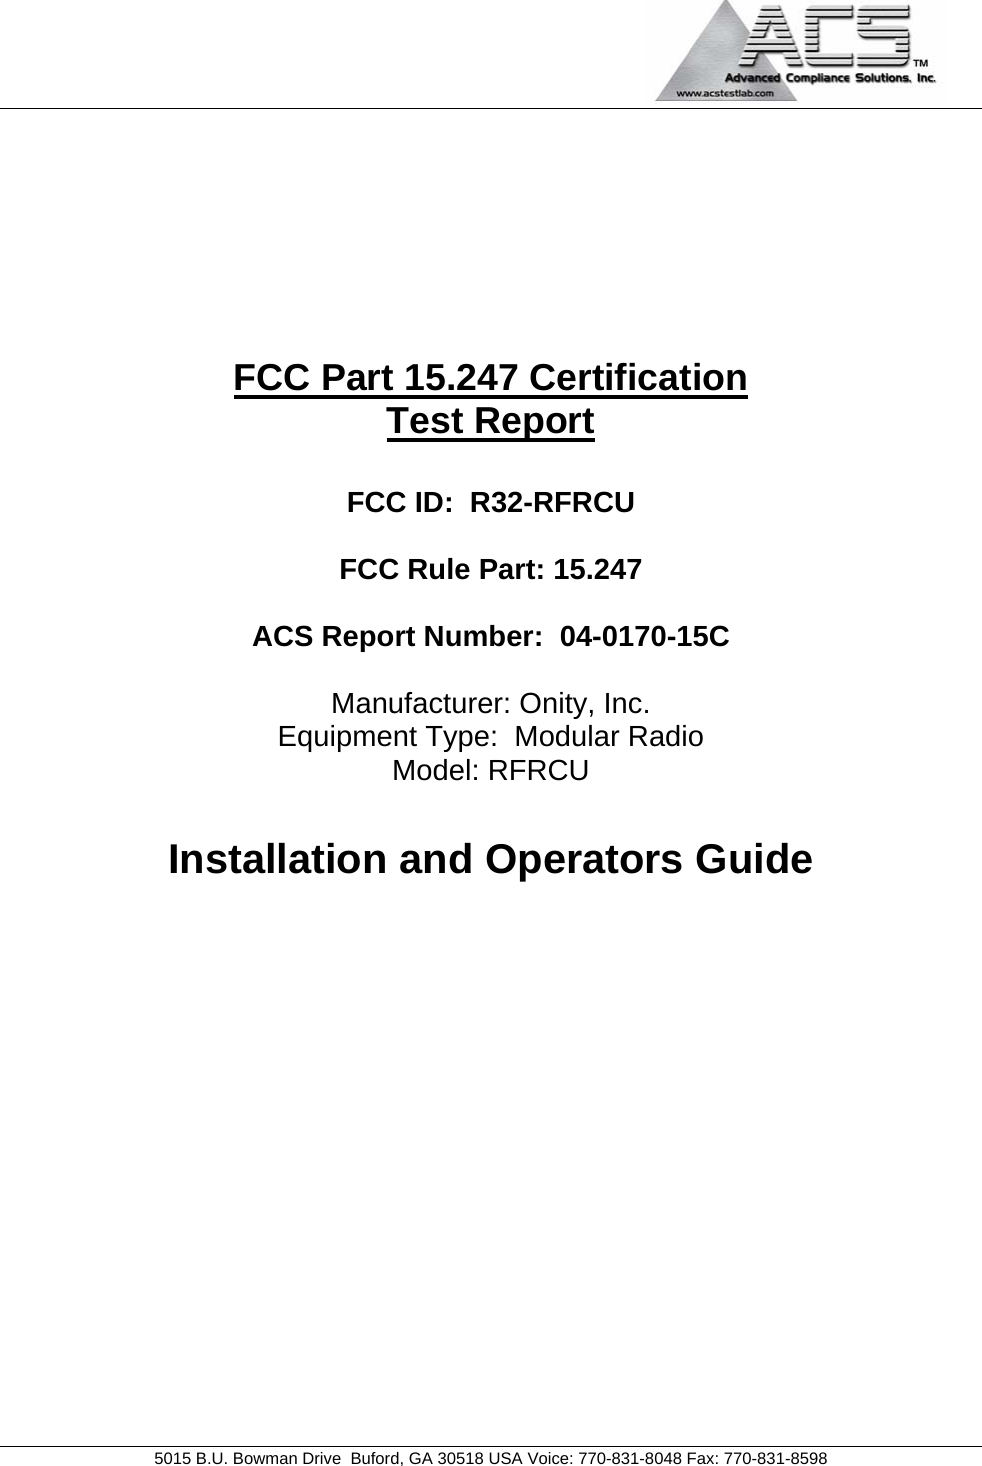                                             5015 B.U. Bowman Drive  Buford, GA 30518 USA Voice: 770-831-8048 Fax: 770-831-8598        FCC Part 15.247 Certification Test Report  FCC ID:  R32-RFRCU  FCC Rule Part: 15.247  ACS Report Number:  04-0170-15C   Manufacturer: Onity, Inc. Equipment Type:  Modular Radio Model: RFRCU  Installation and Operators Guide            